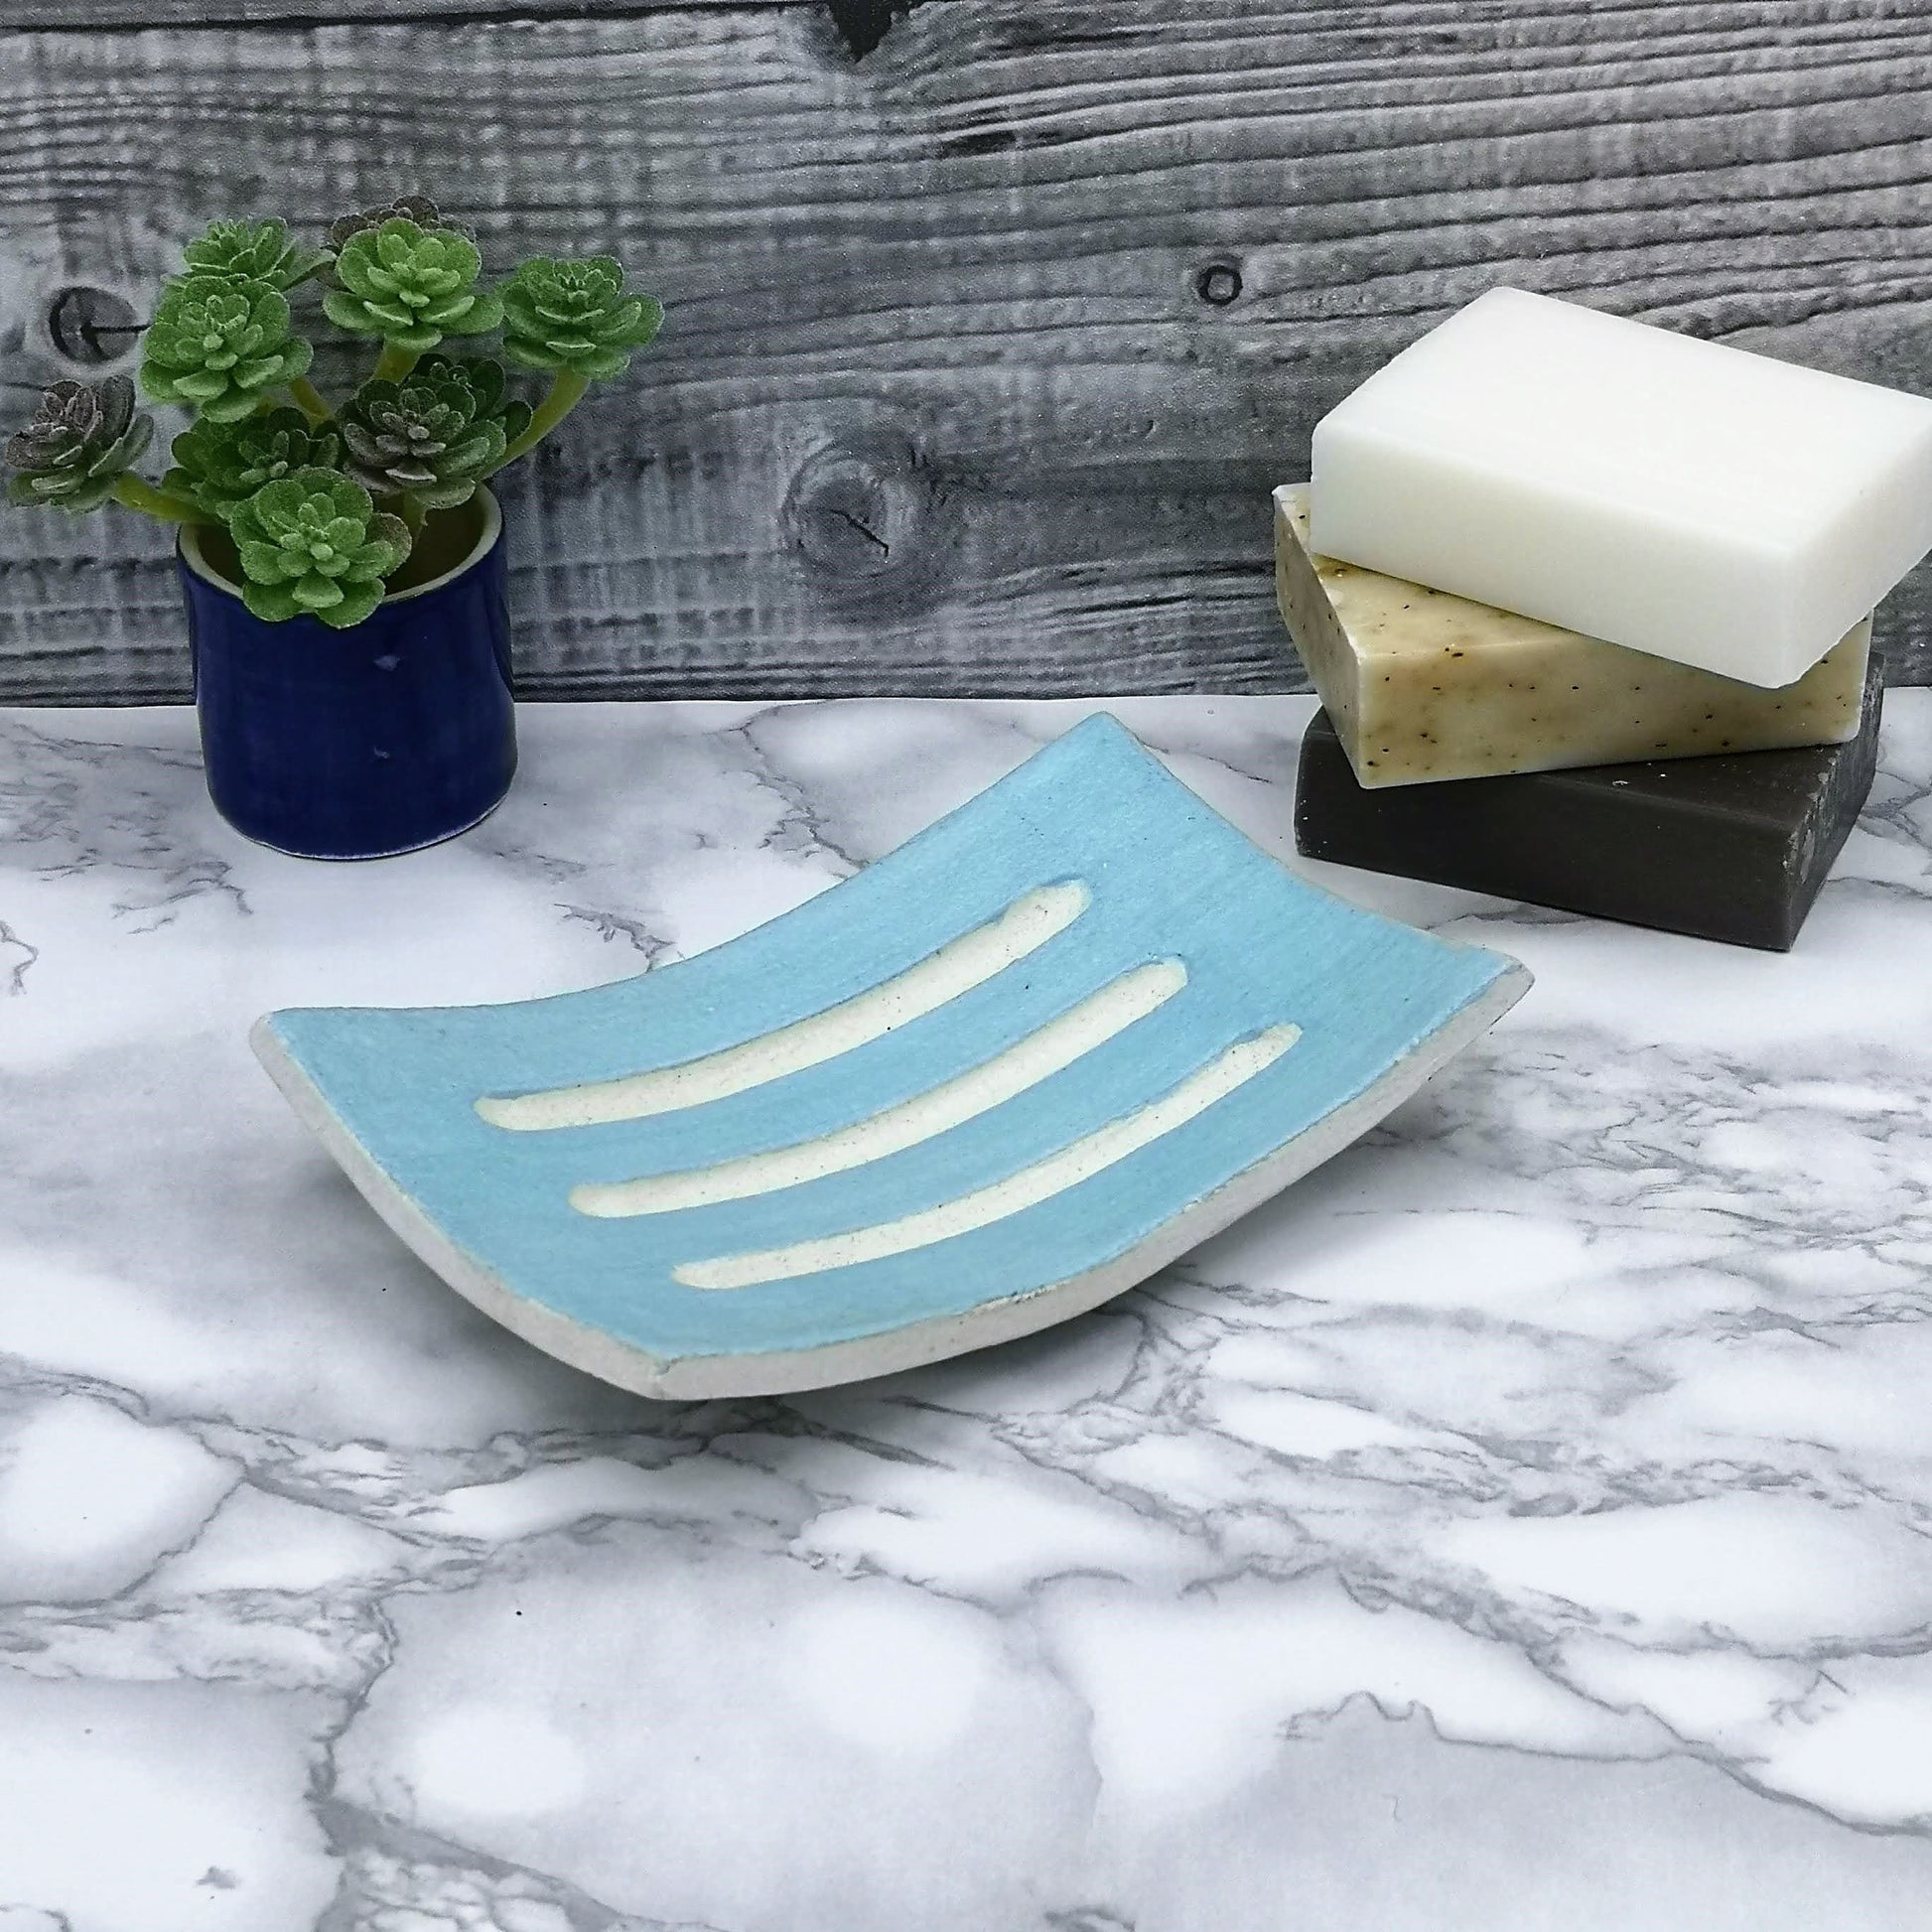 5 Inche Handmade Ceramic Turquoise Blue Rectangle Draining Soap Dish For Bathroom Decor, Soap Bar Holder Dispenser With Drain, Soap Saver - Ceramica Ana Rafael